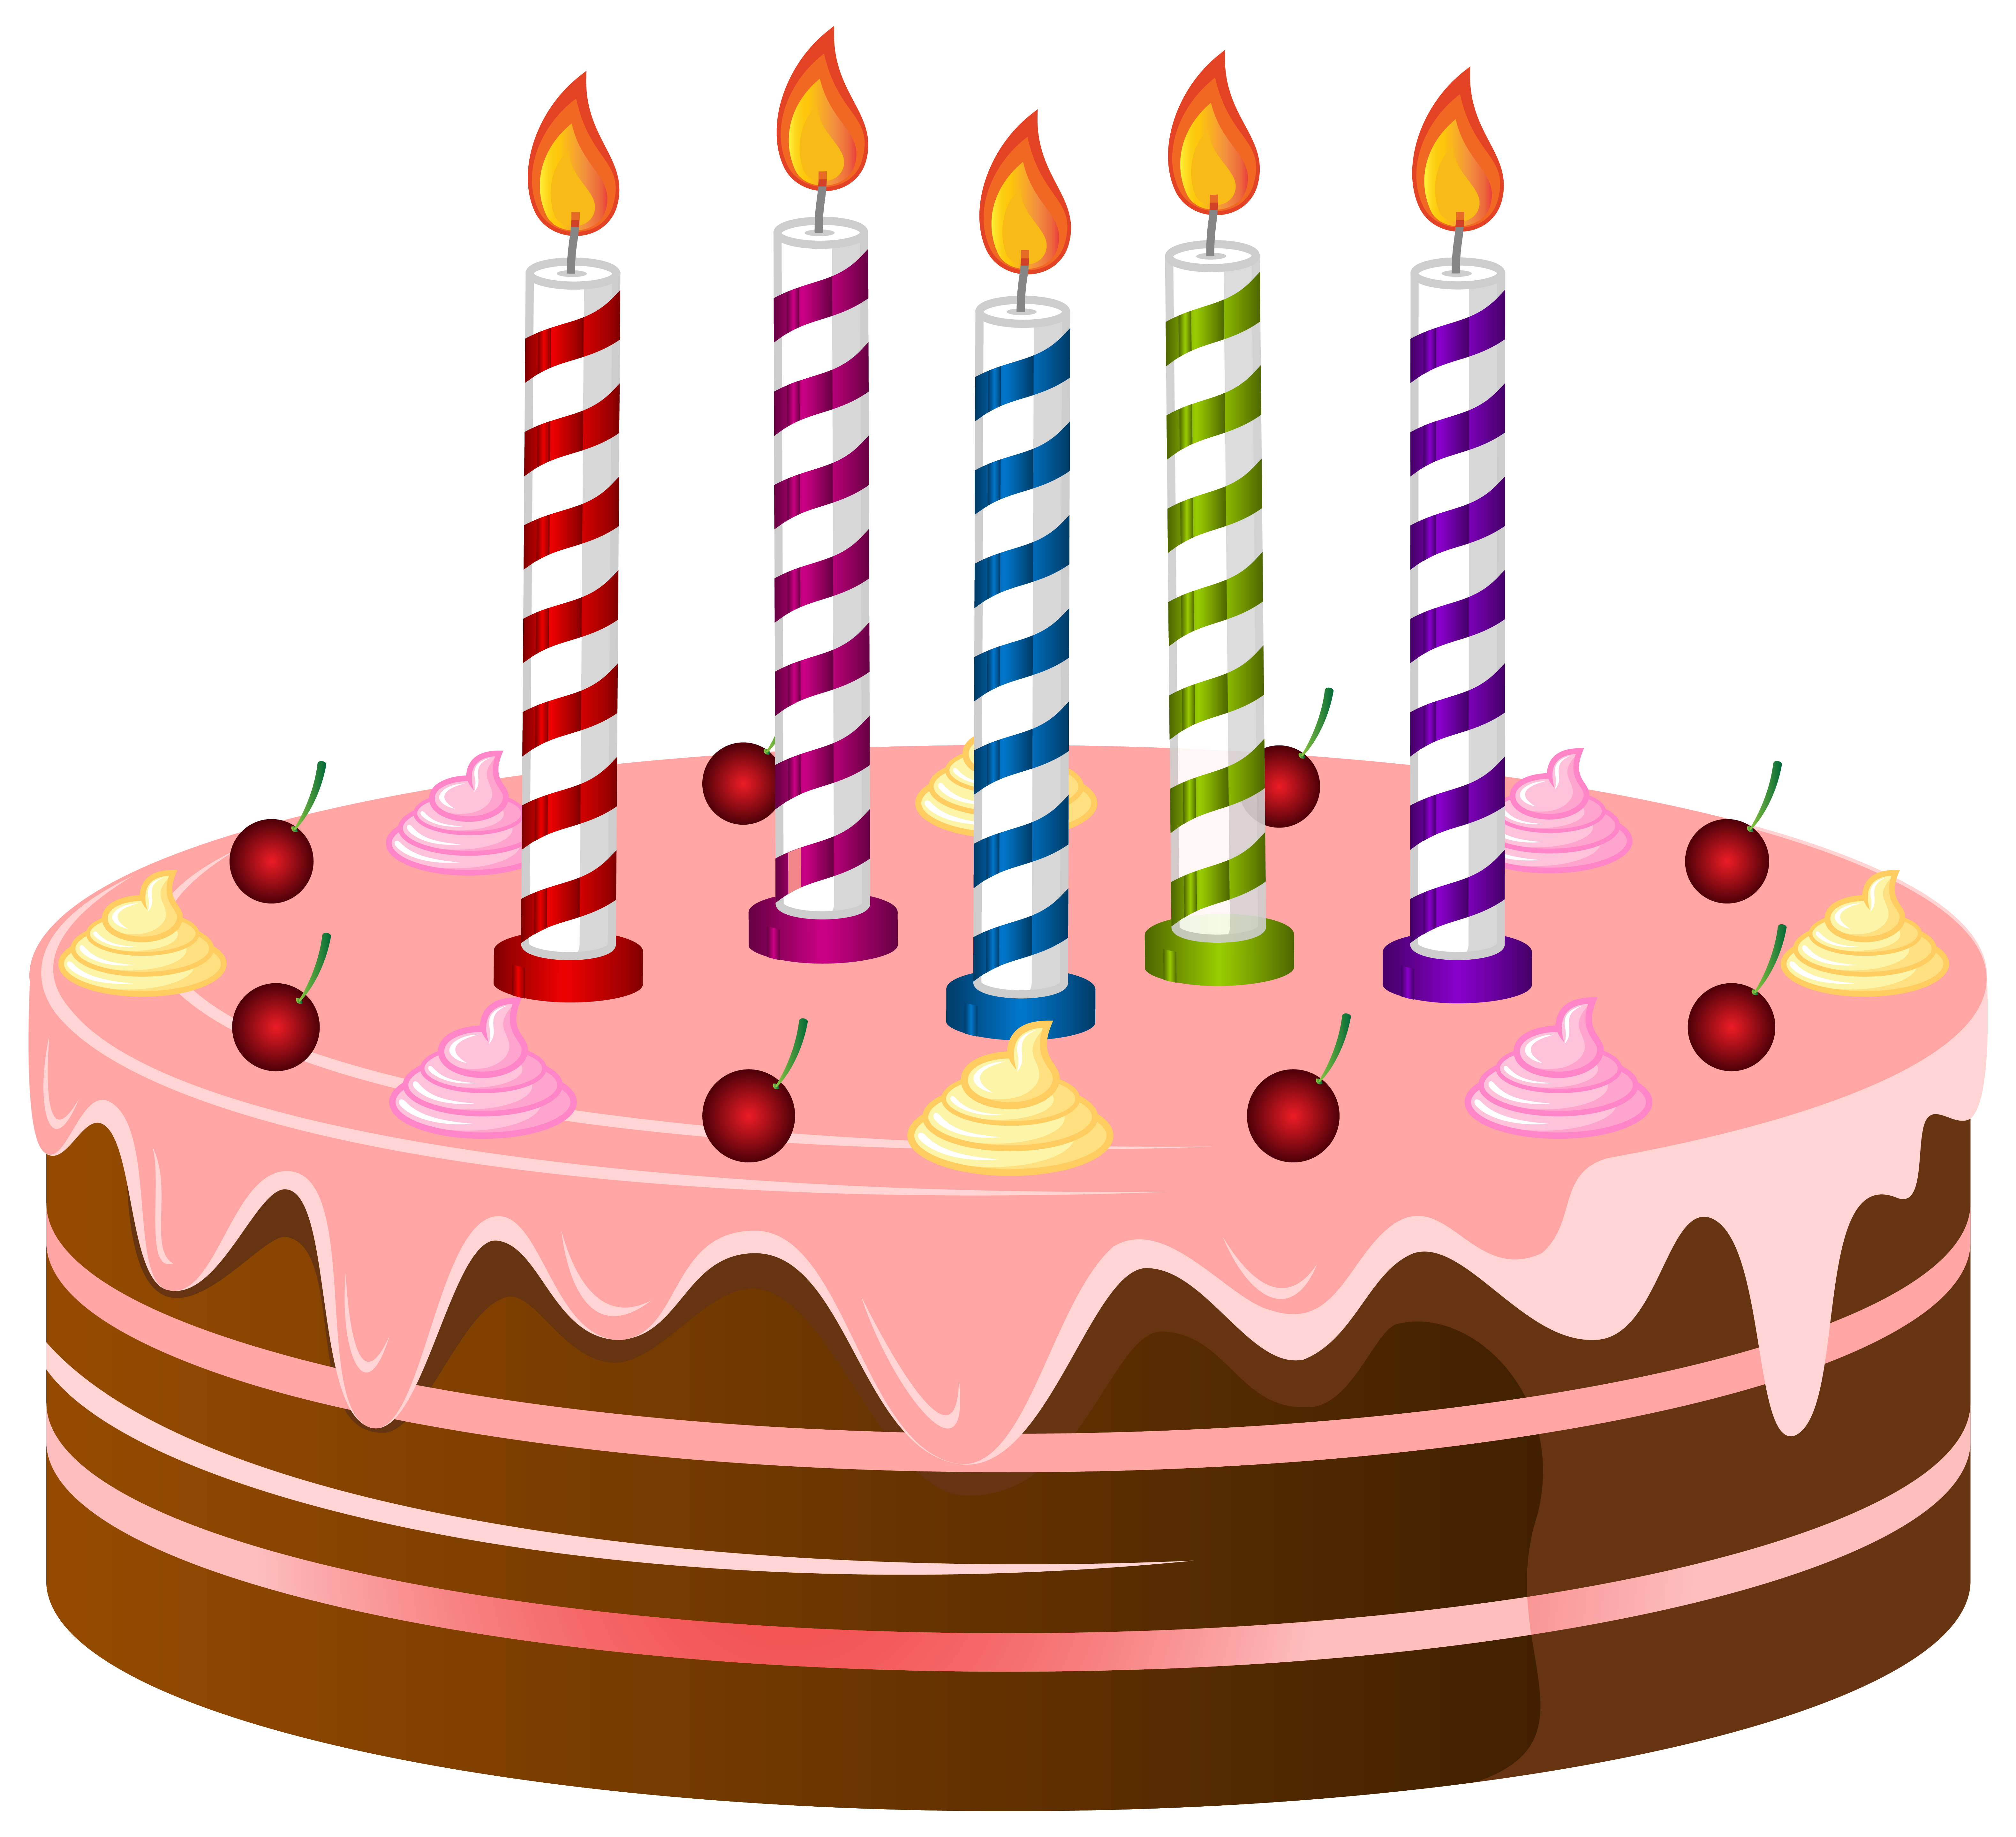 Birthday cake clip art image